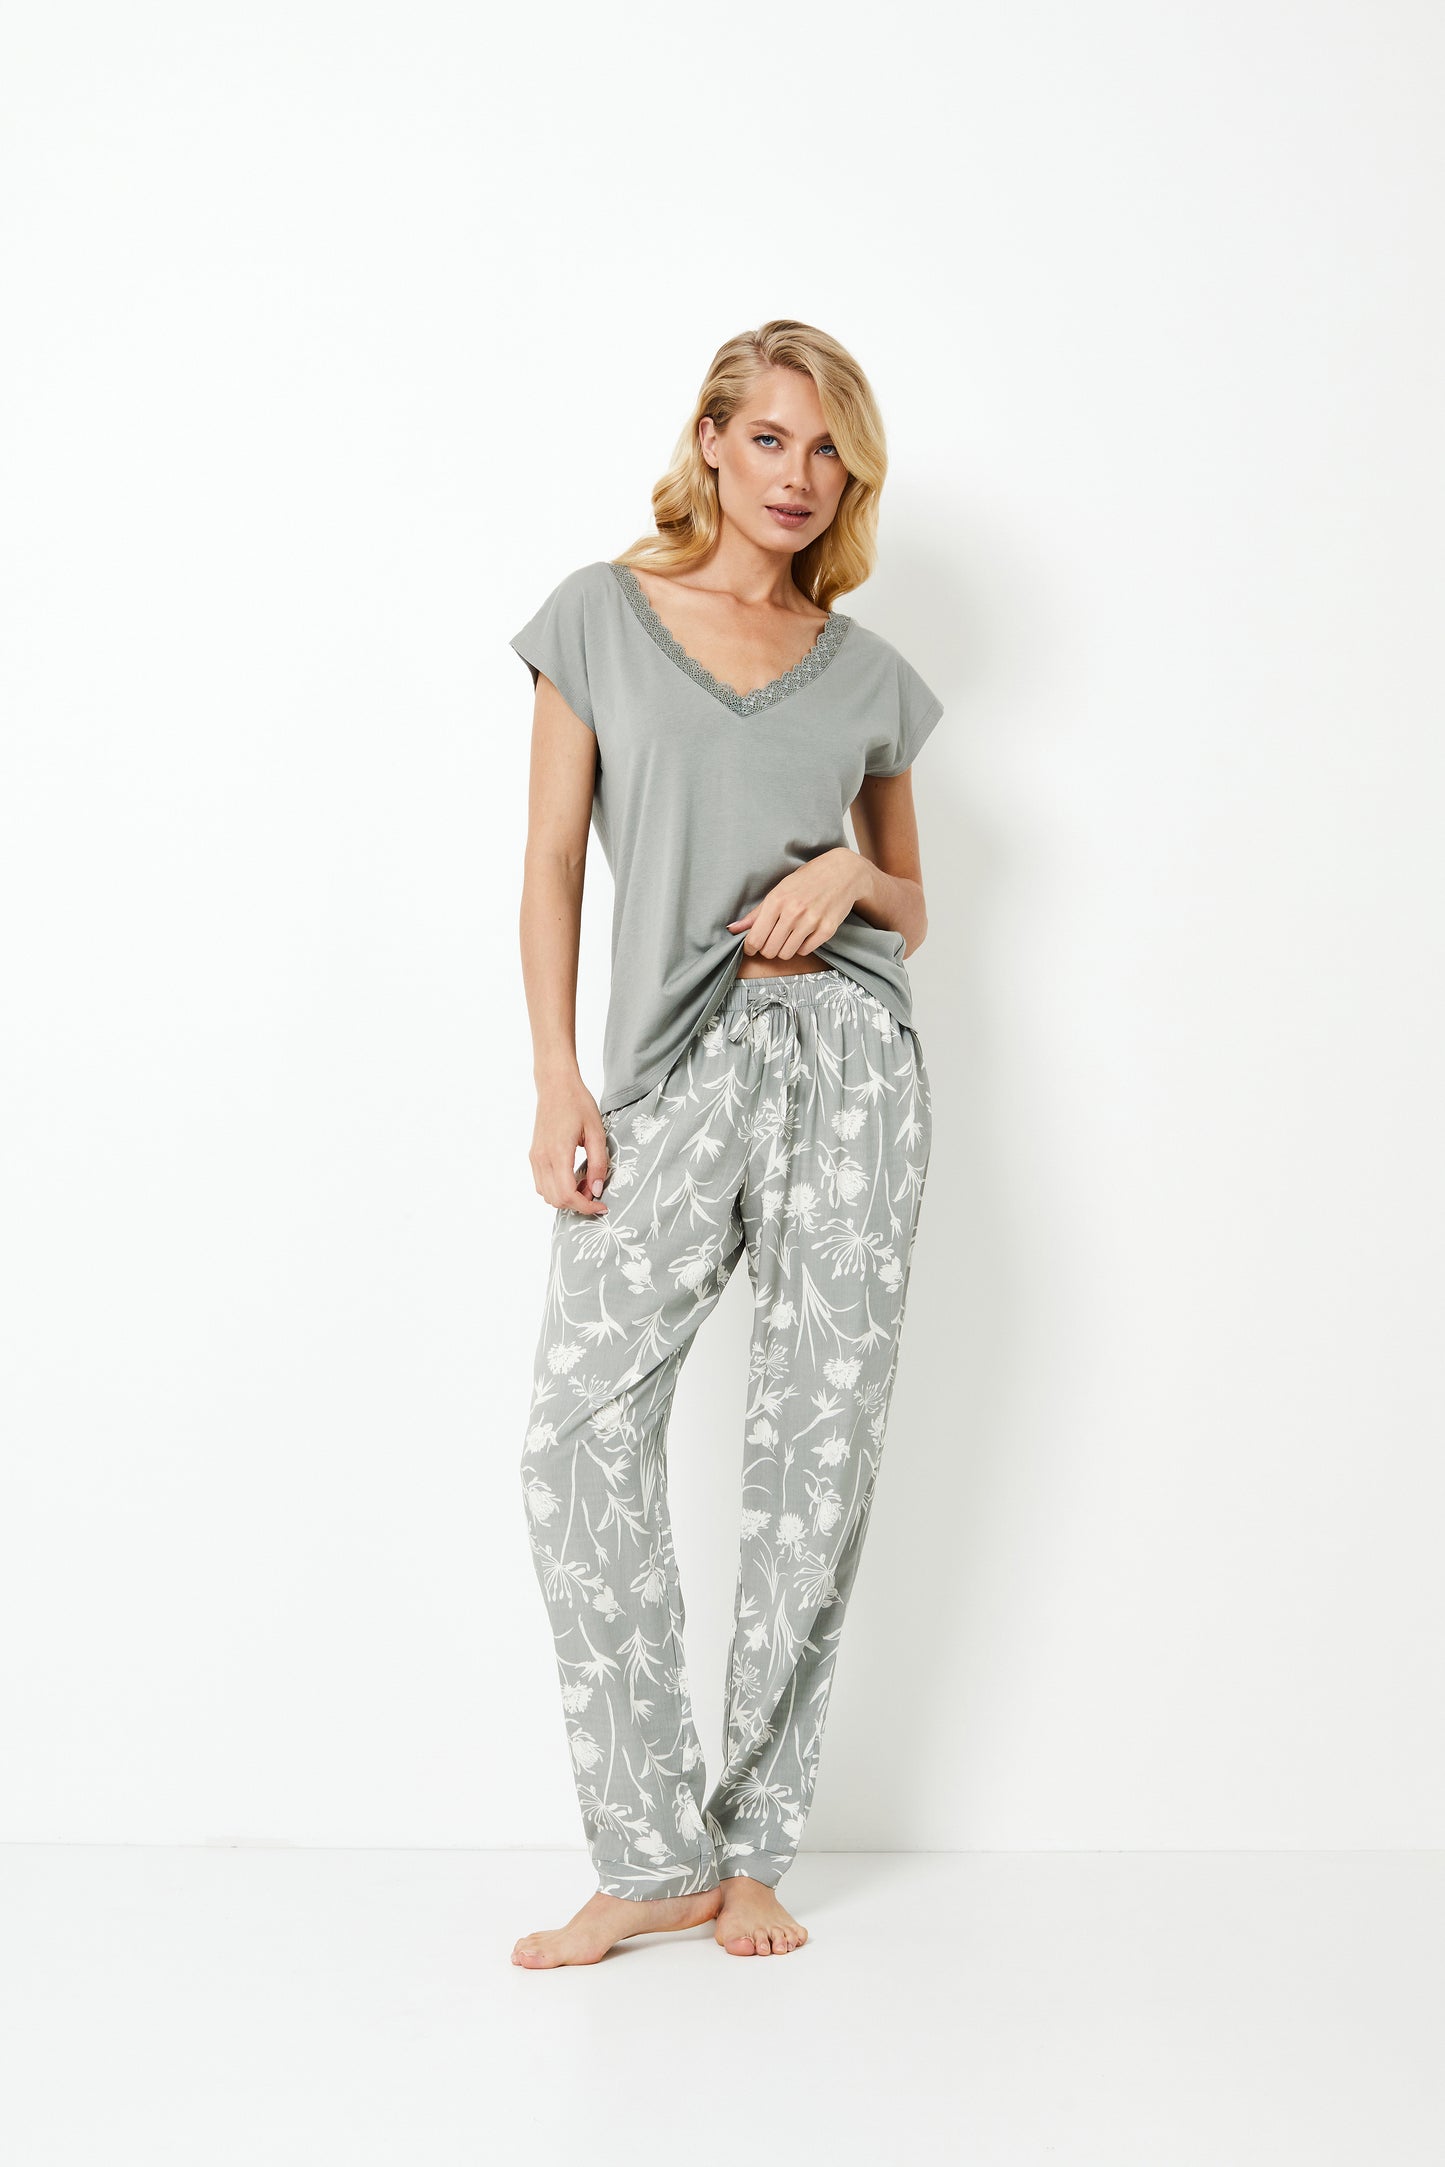 Aruelle Ladies Short Sleeve Pyjamas 'Fabiana' Sage Green & White Floral PJ Set